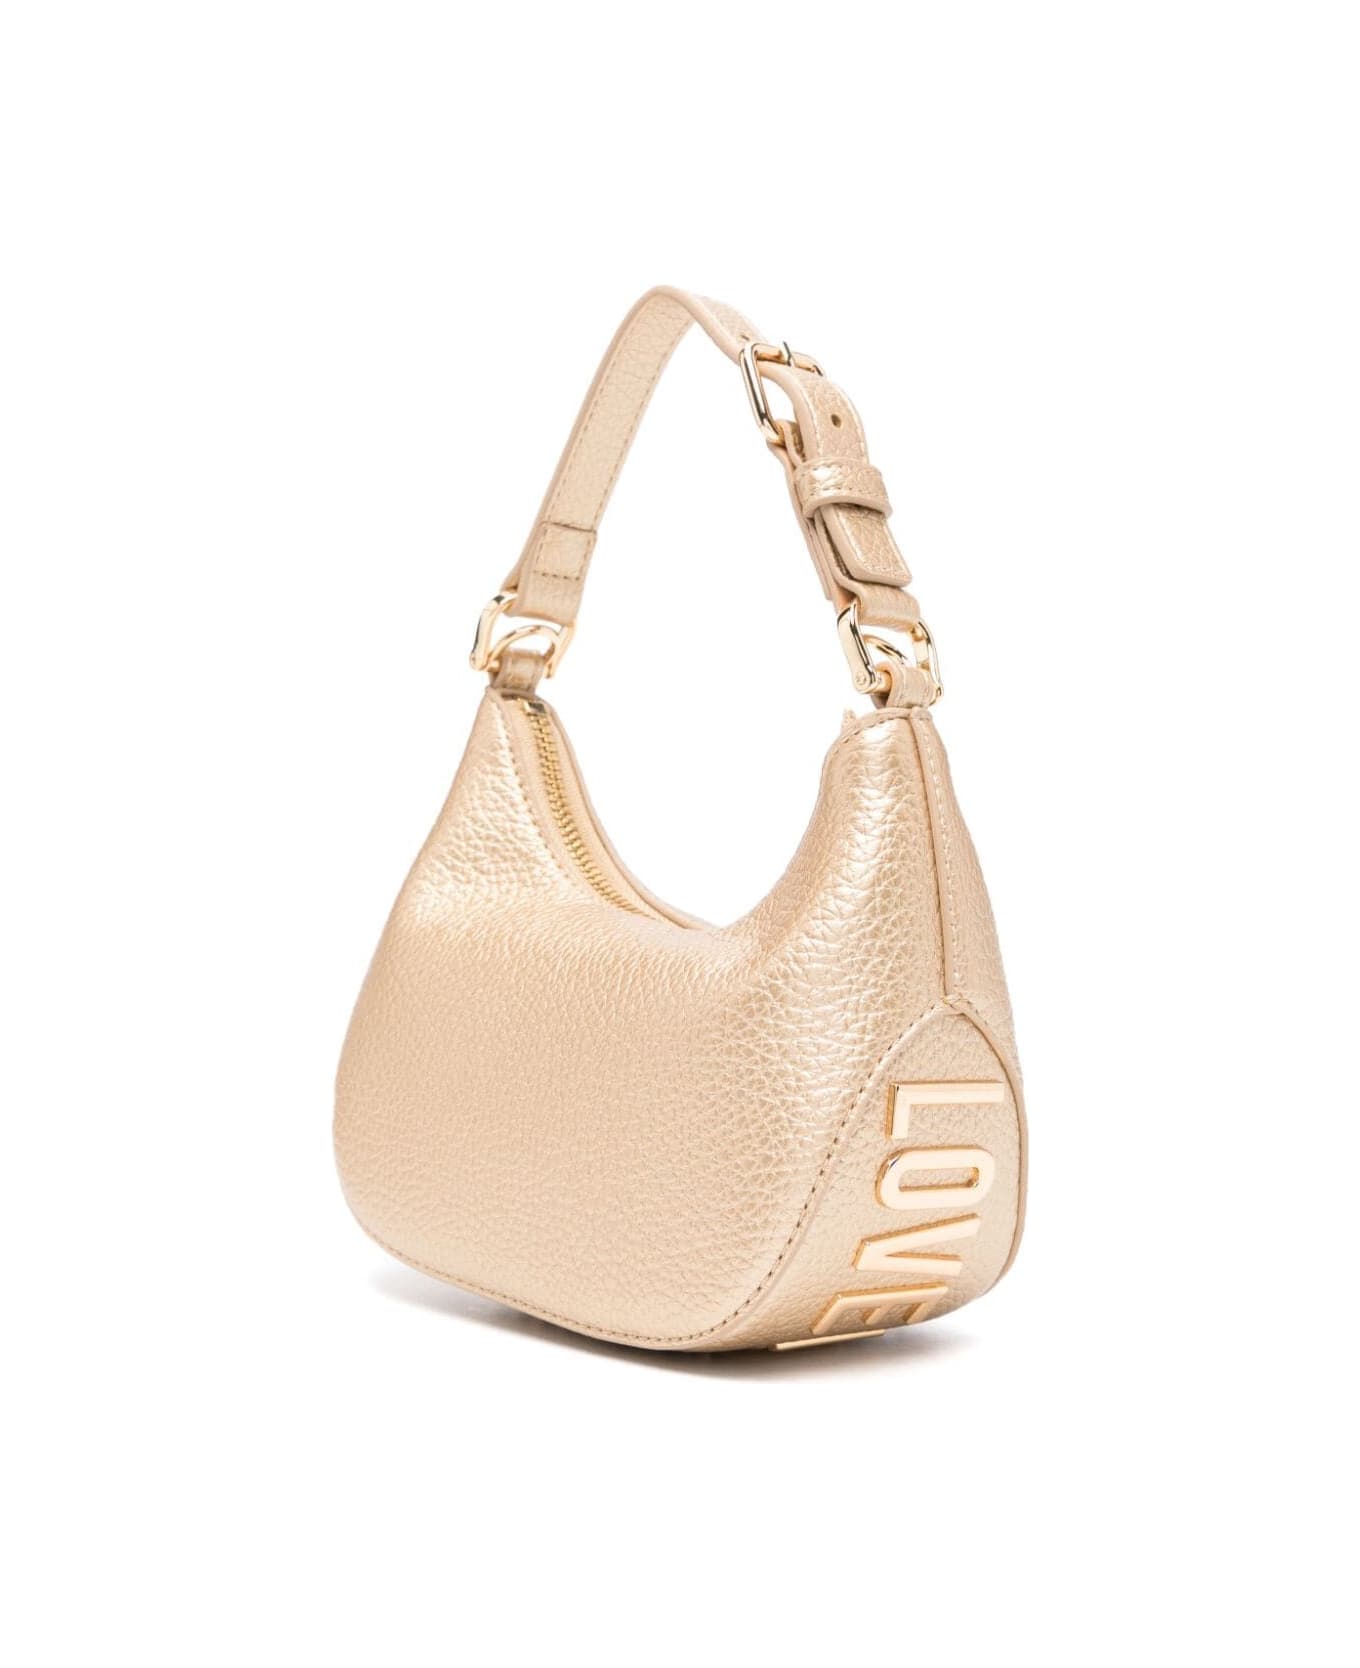 Love Moschino Laminated Shoulder Bag - A Gold